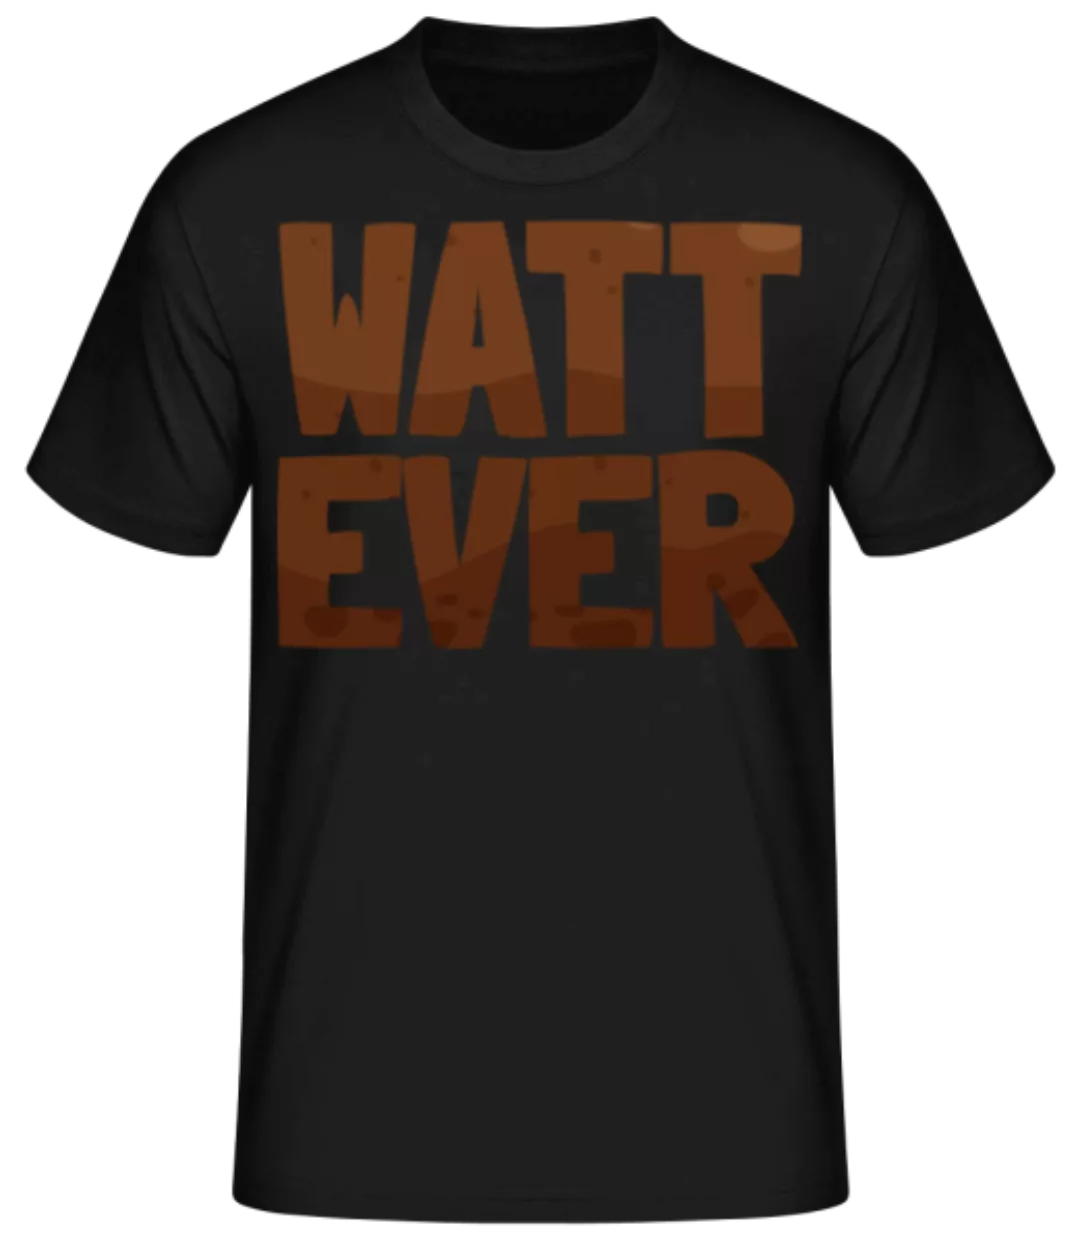 Watt Ever · Männer Basic T-Shirt günstig online kaufen